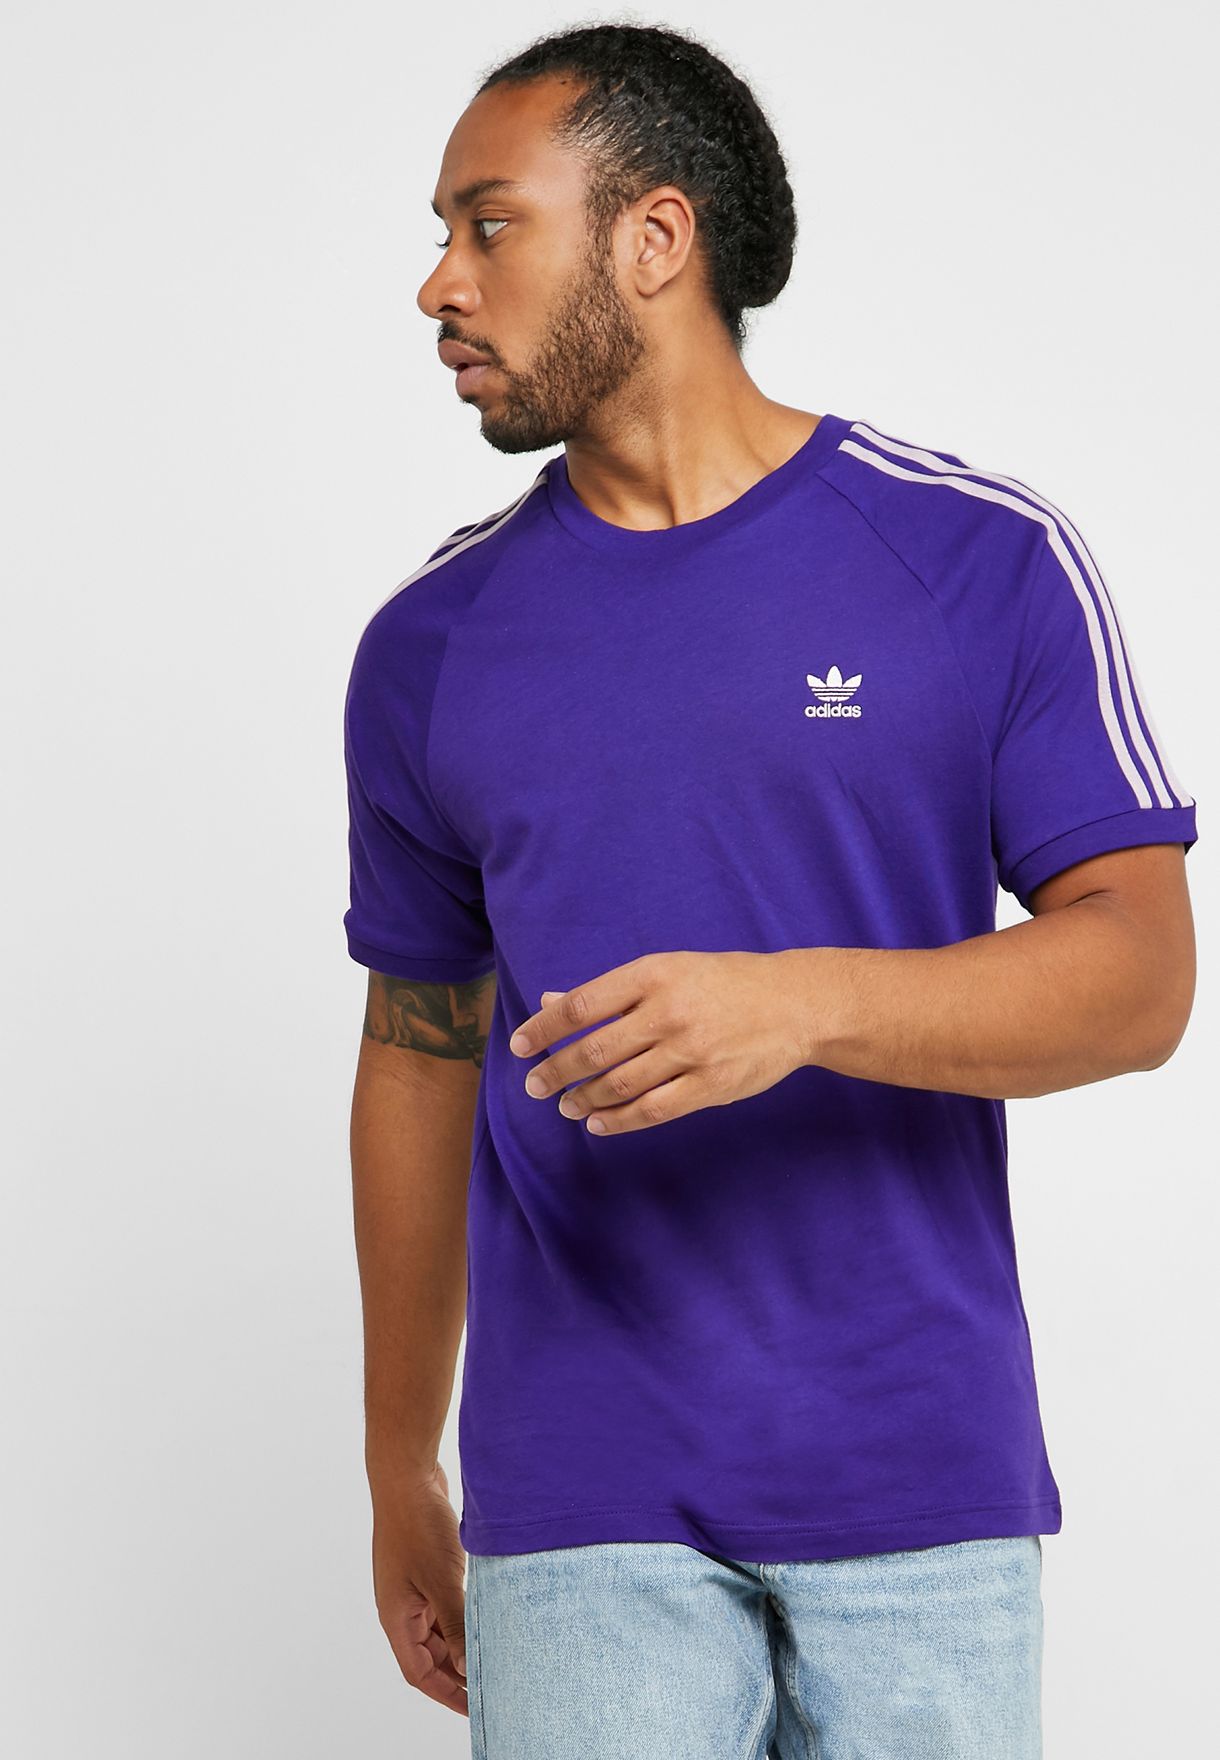 adidas 3 stripe t shirt purple